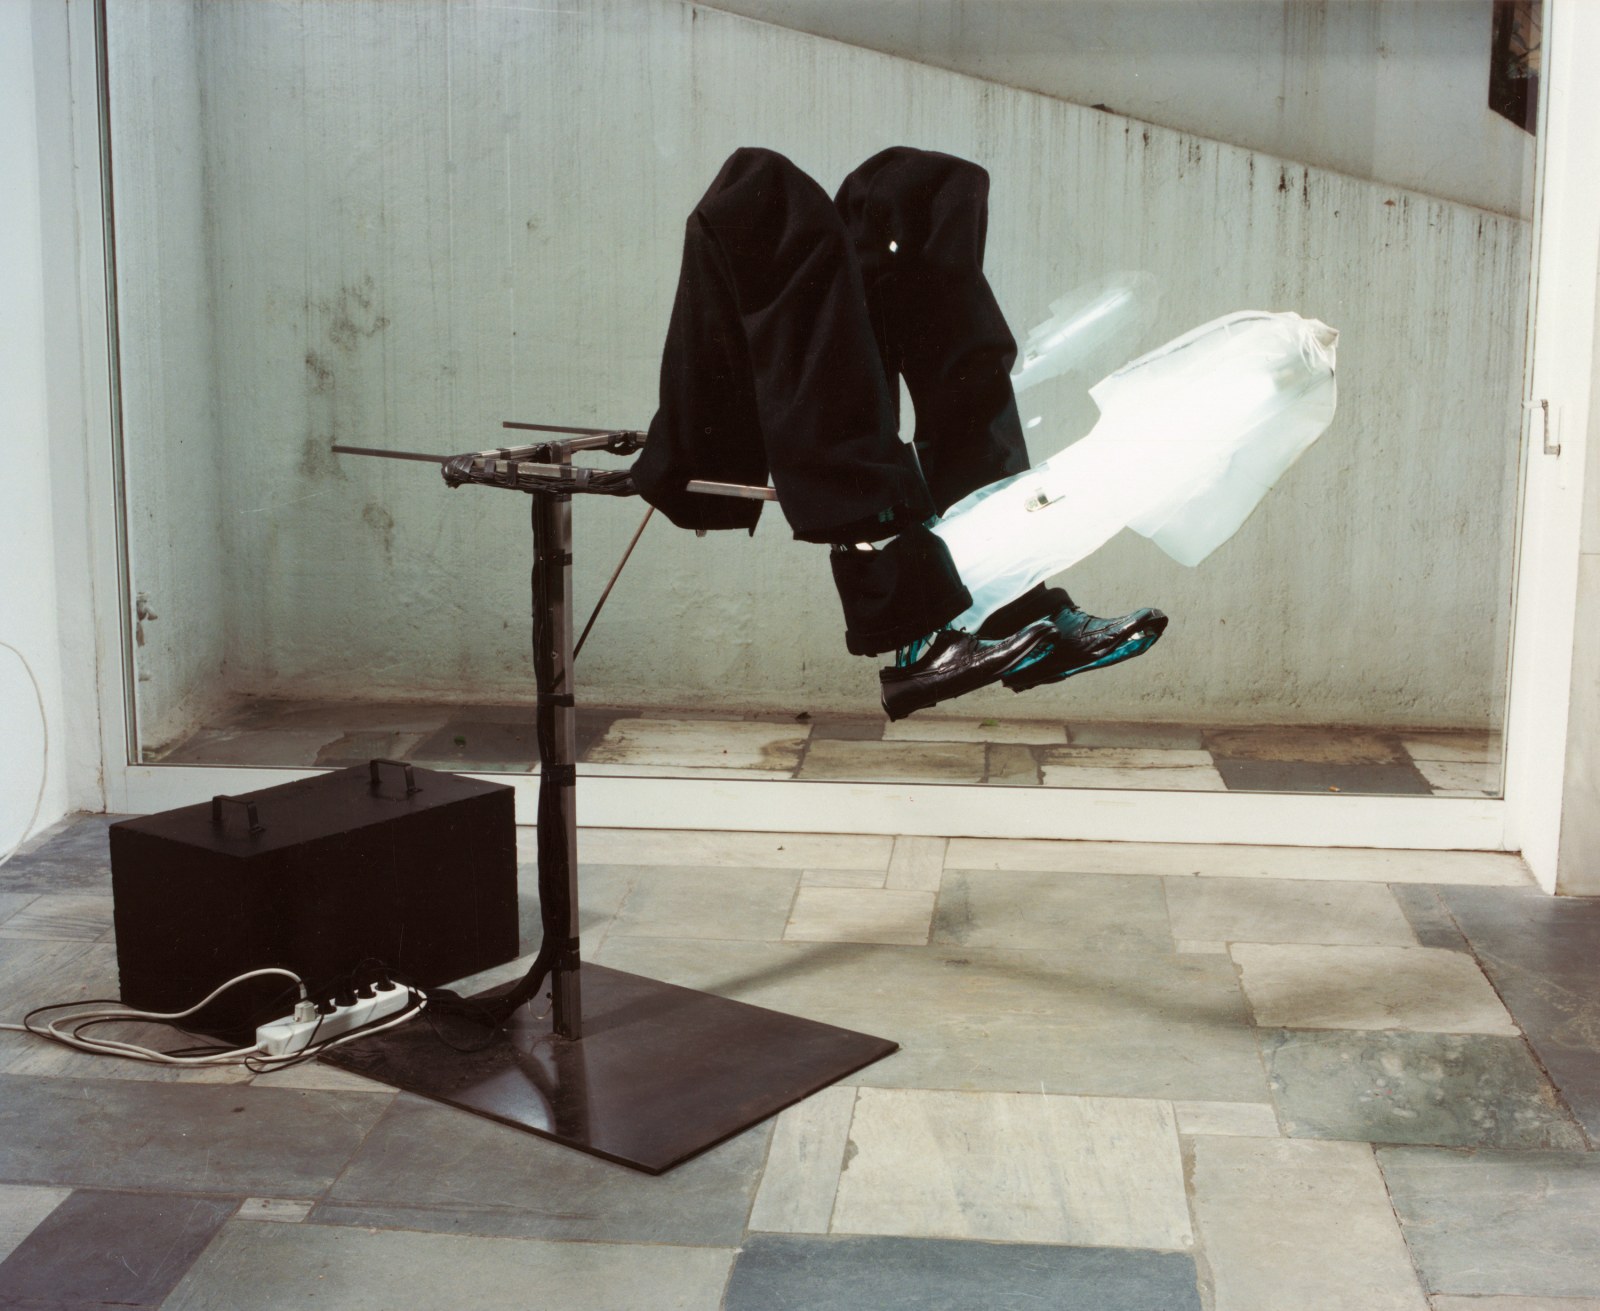 GEORGE LAPPAS, Mr. Sphinx - Ghost in the Ankles, 1997